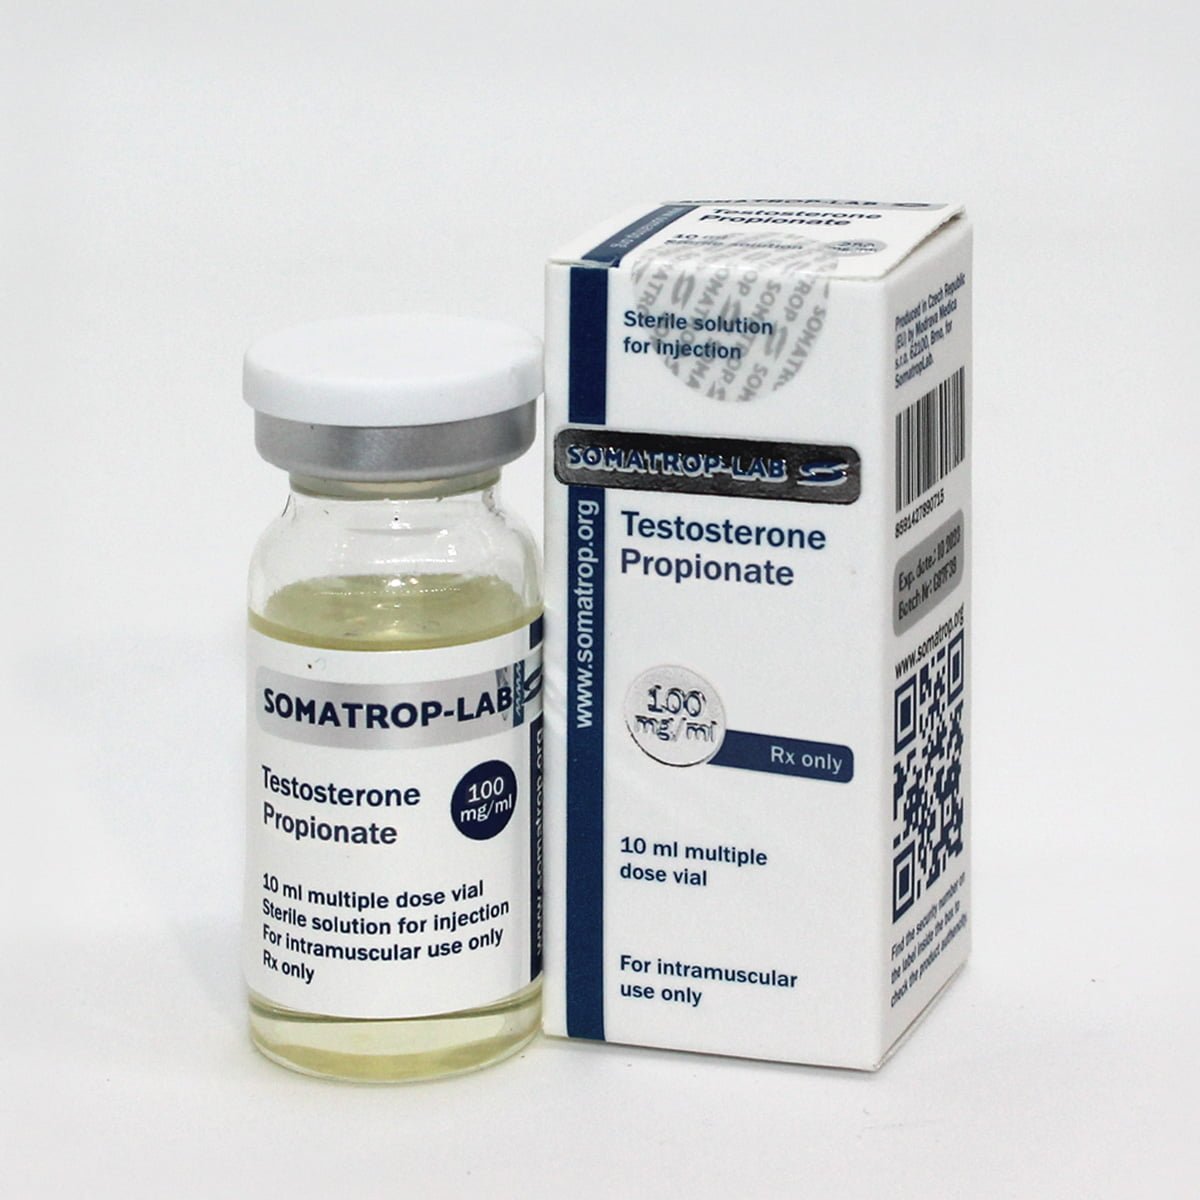 Somatrop-Lab Testosterone Propionate